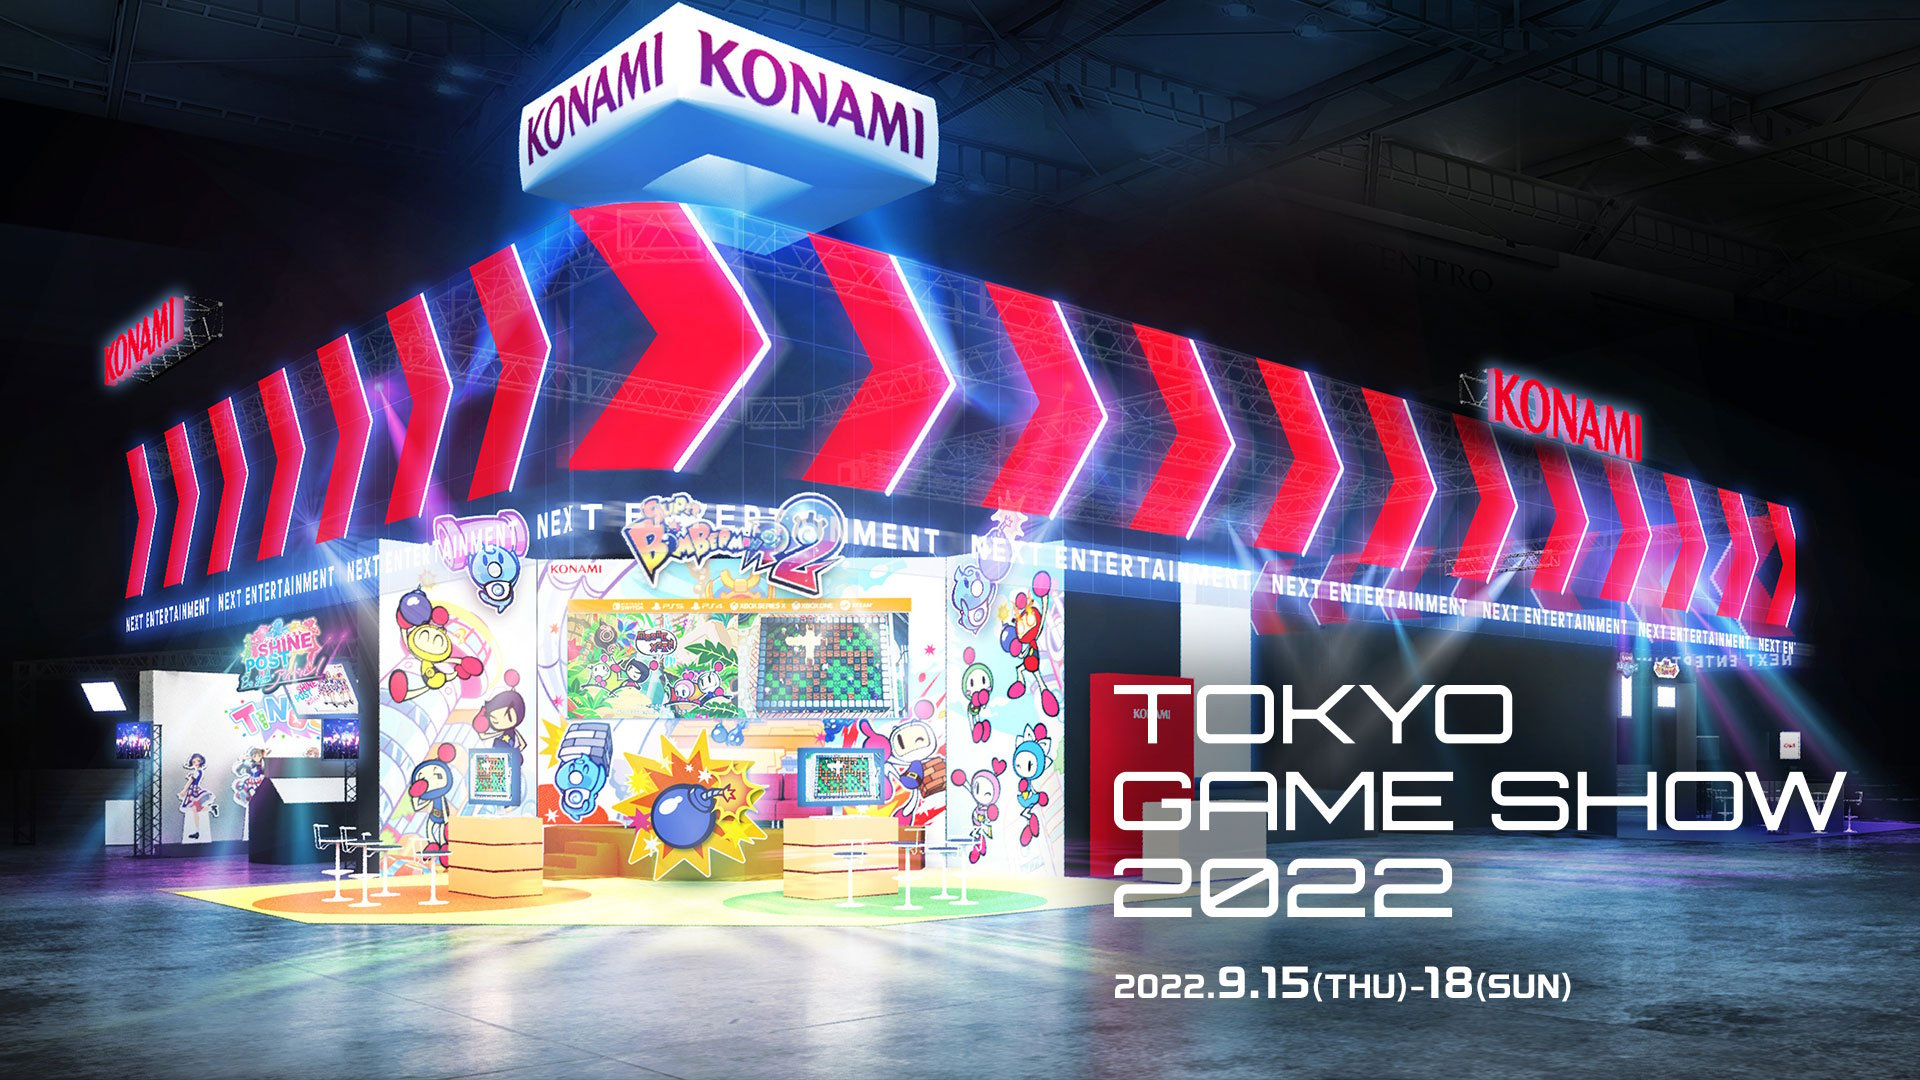 Konami는 TGS에서 “Loved Around the World” 시리즈의 새 게임을 발표할 것이라고 밝혔습니다.